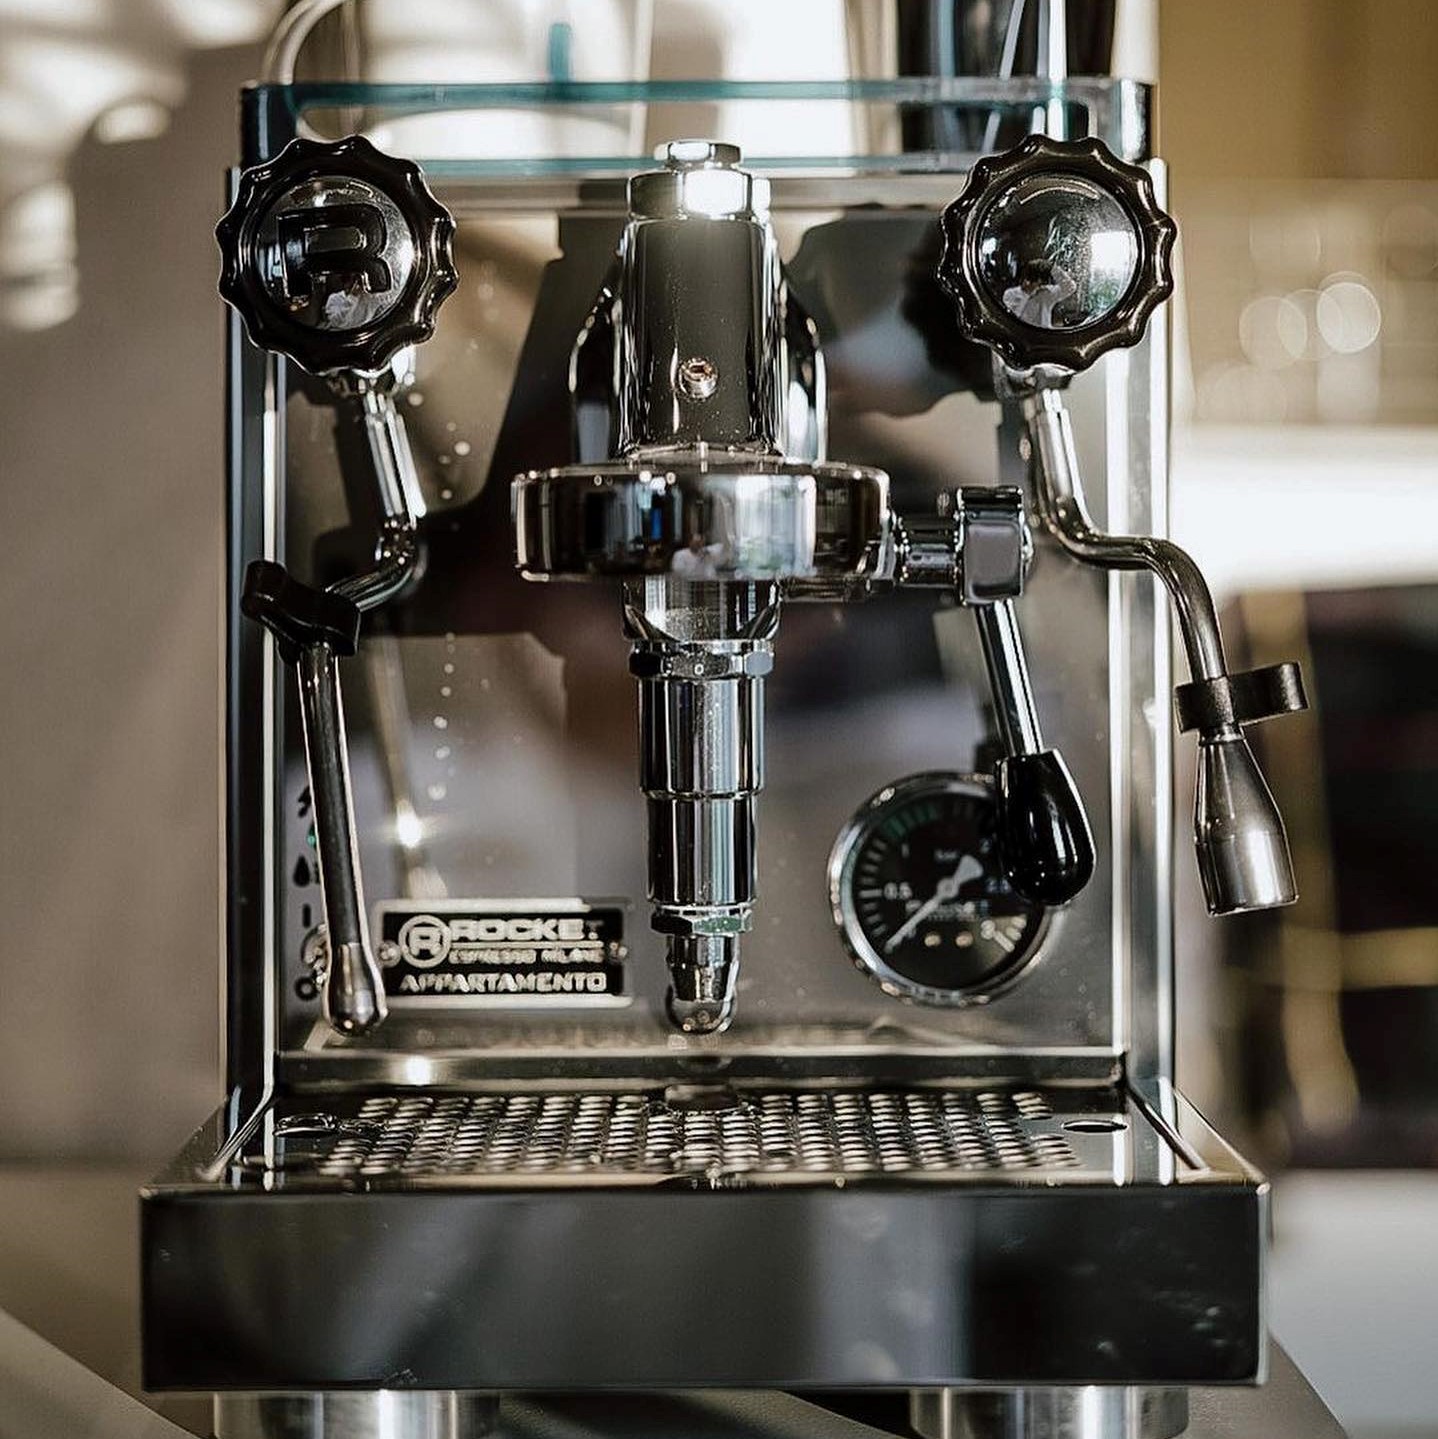 Pákový domácí kávovar Rocket Espresso Appartamento